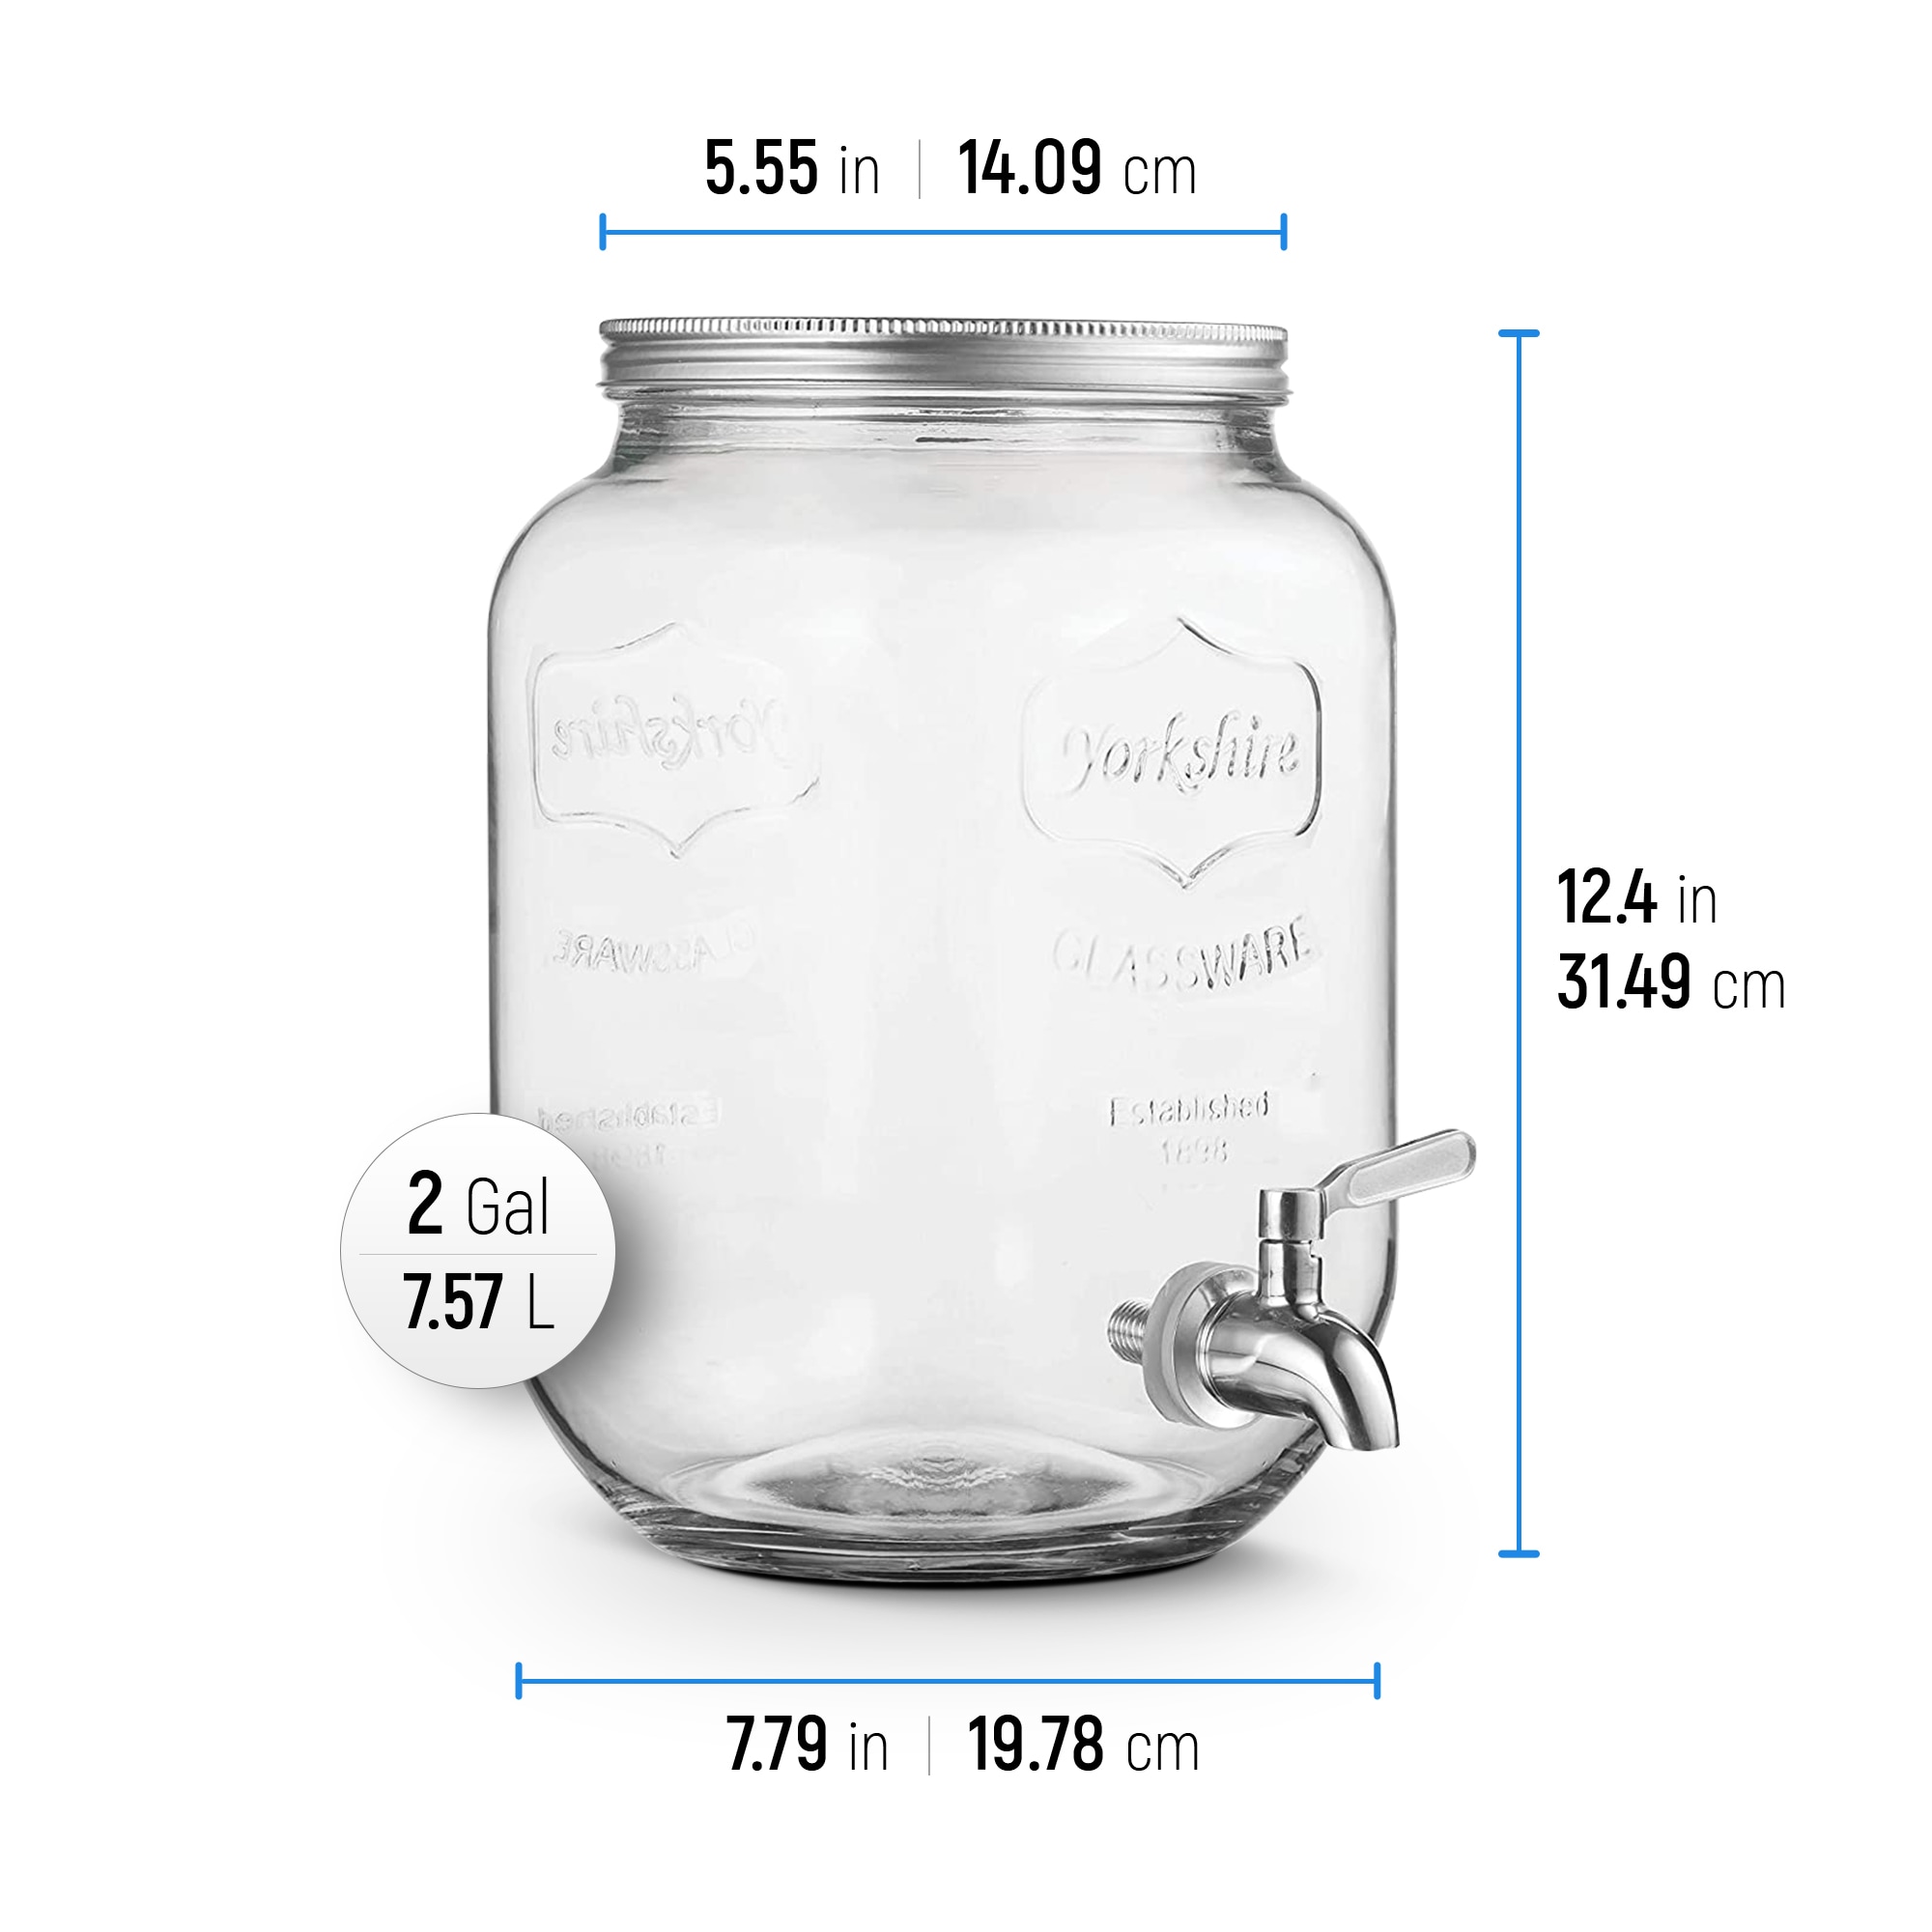 2 Gallon Glass Beverage Dispenser with 18/8 Stainless Steel Spigot